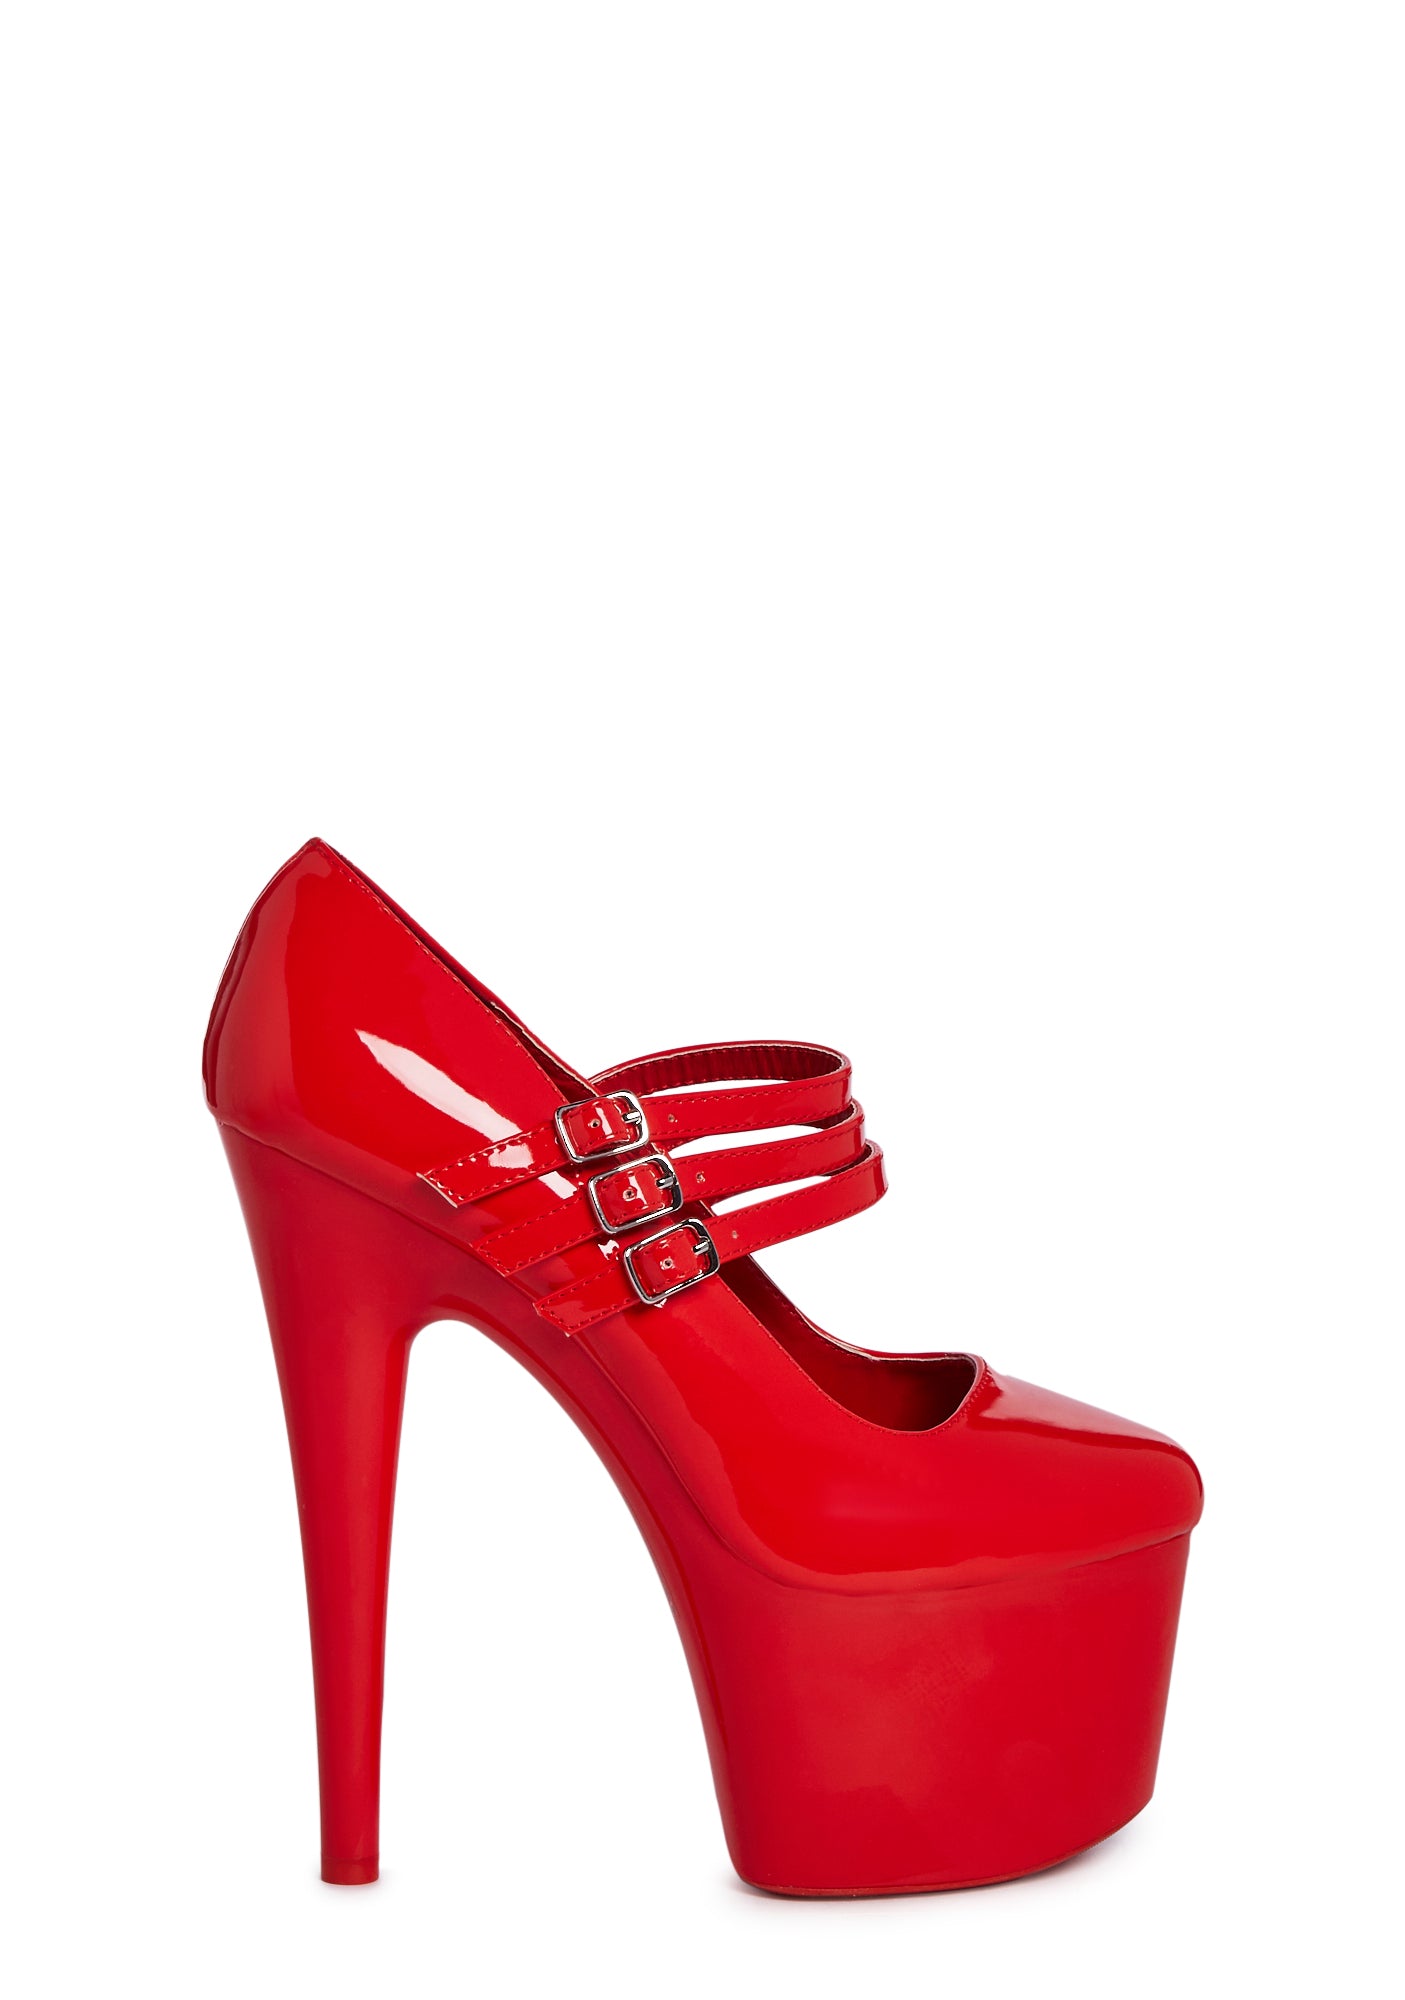 Y.R.U. Patent Vegan Leather Pump Stiletto Heels - Red